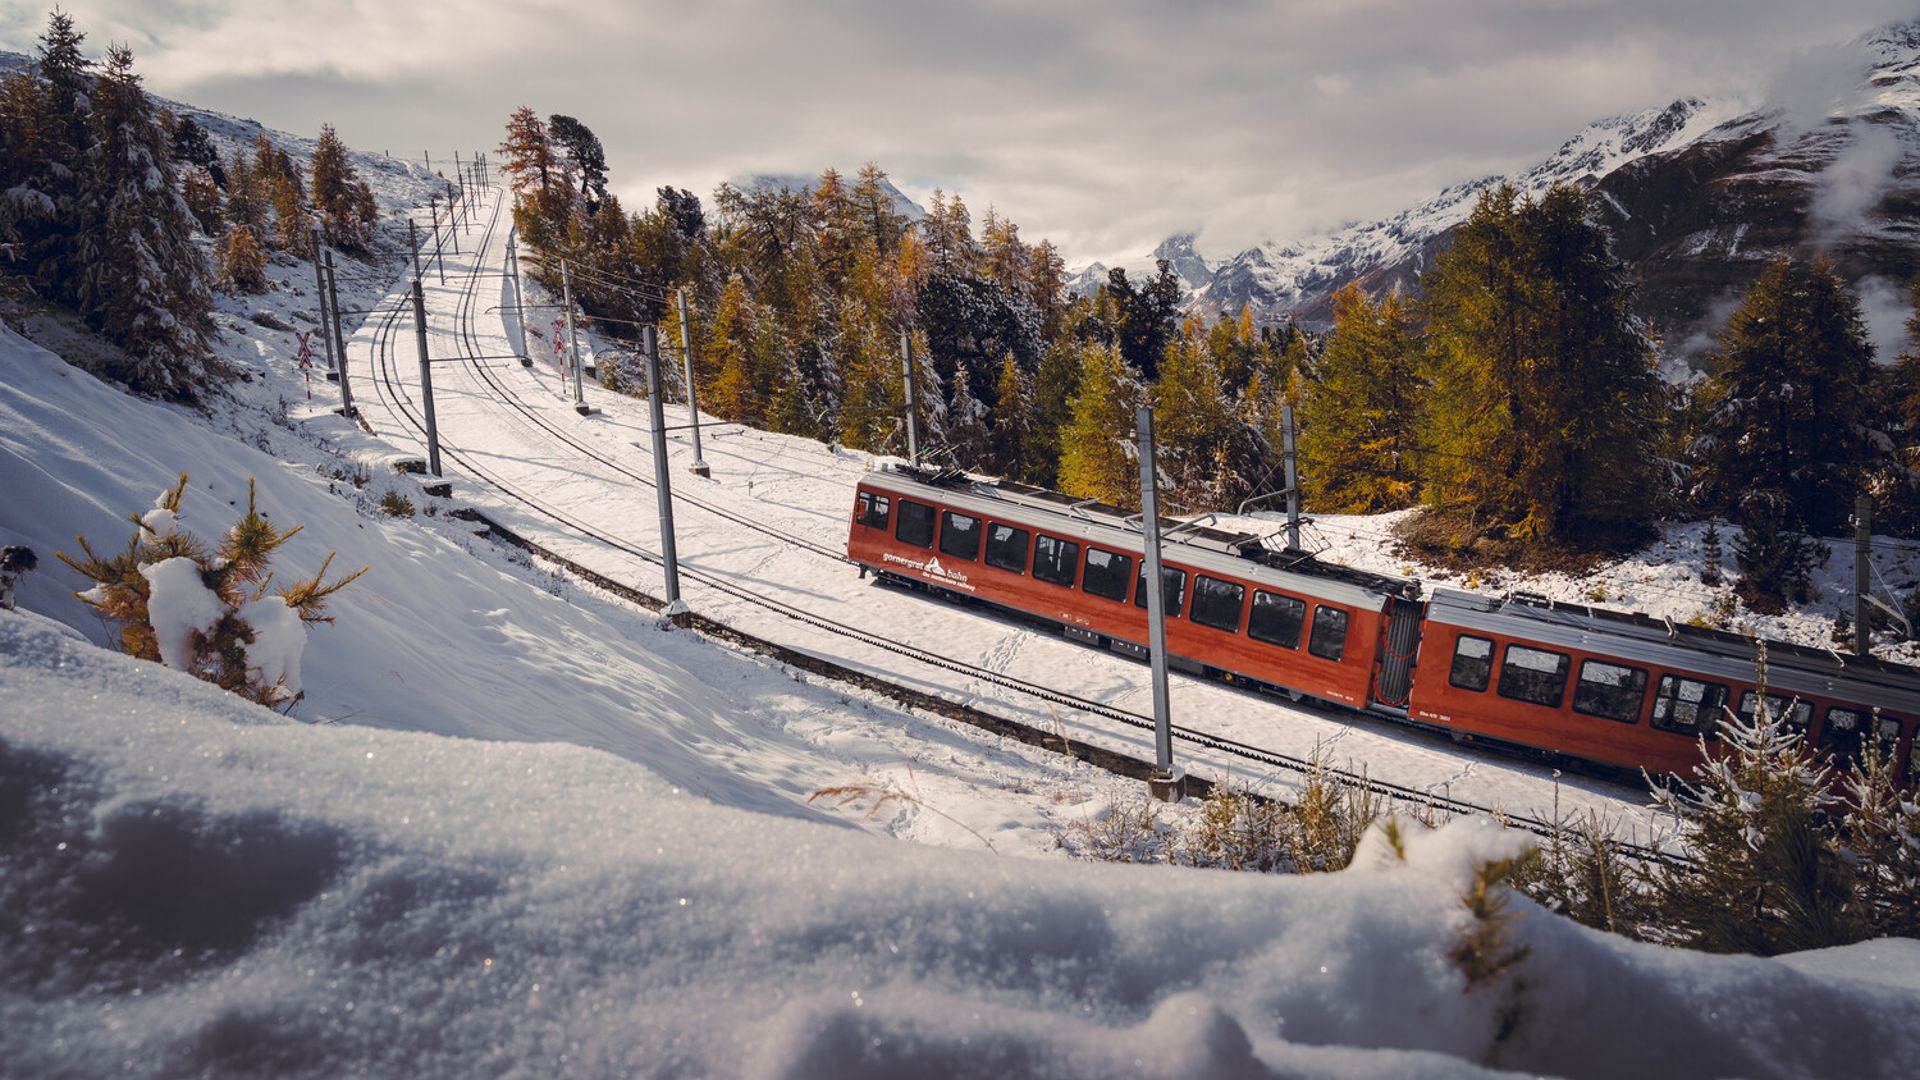 Gornergrat Bahn train above Riffelalp in winter